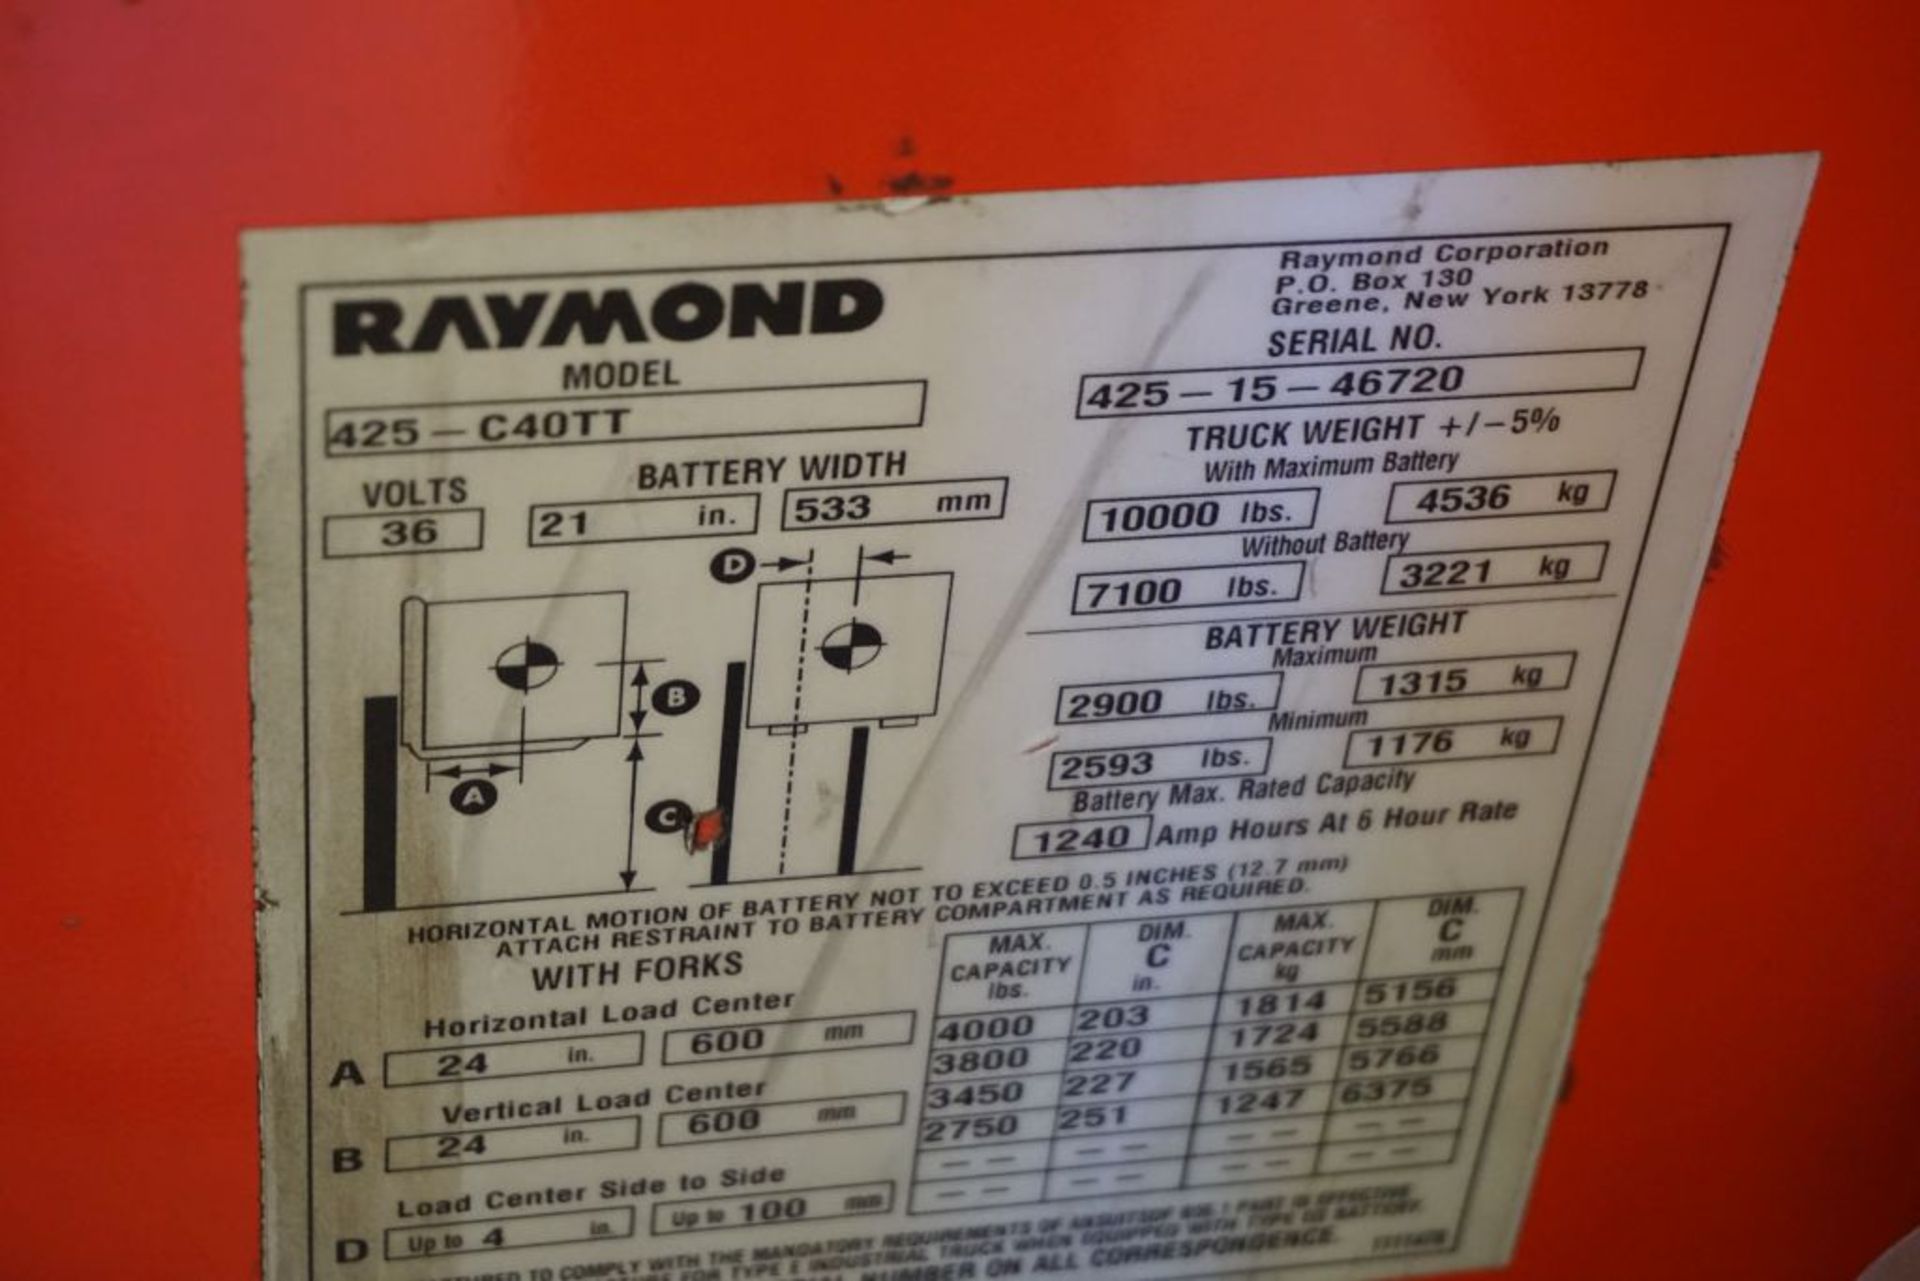 Raymond 425 C40TT Docker Stand Up Electric Forklift - Model No. 425-C40TT; Serial No. 425-15- - Image 14 of 22